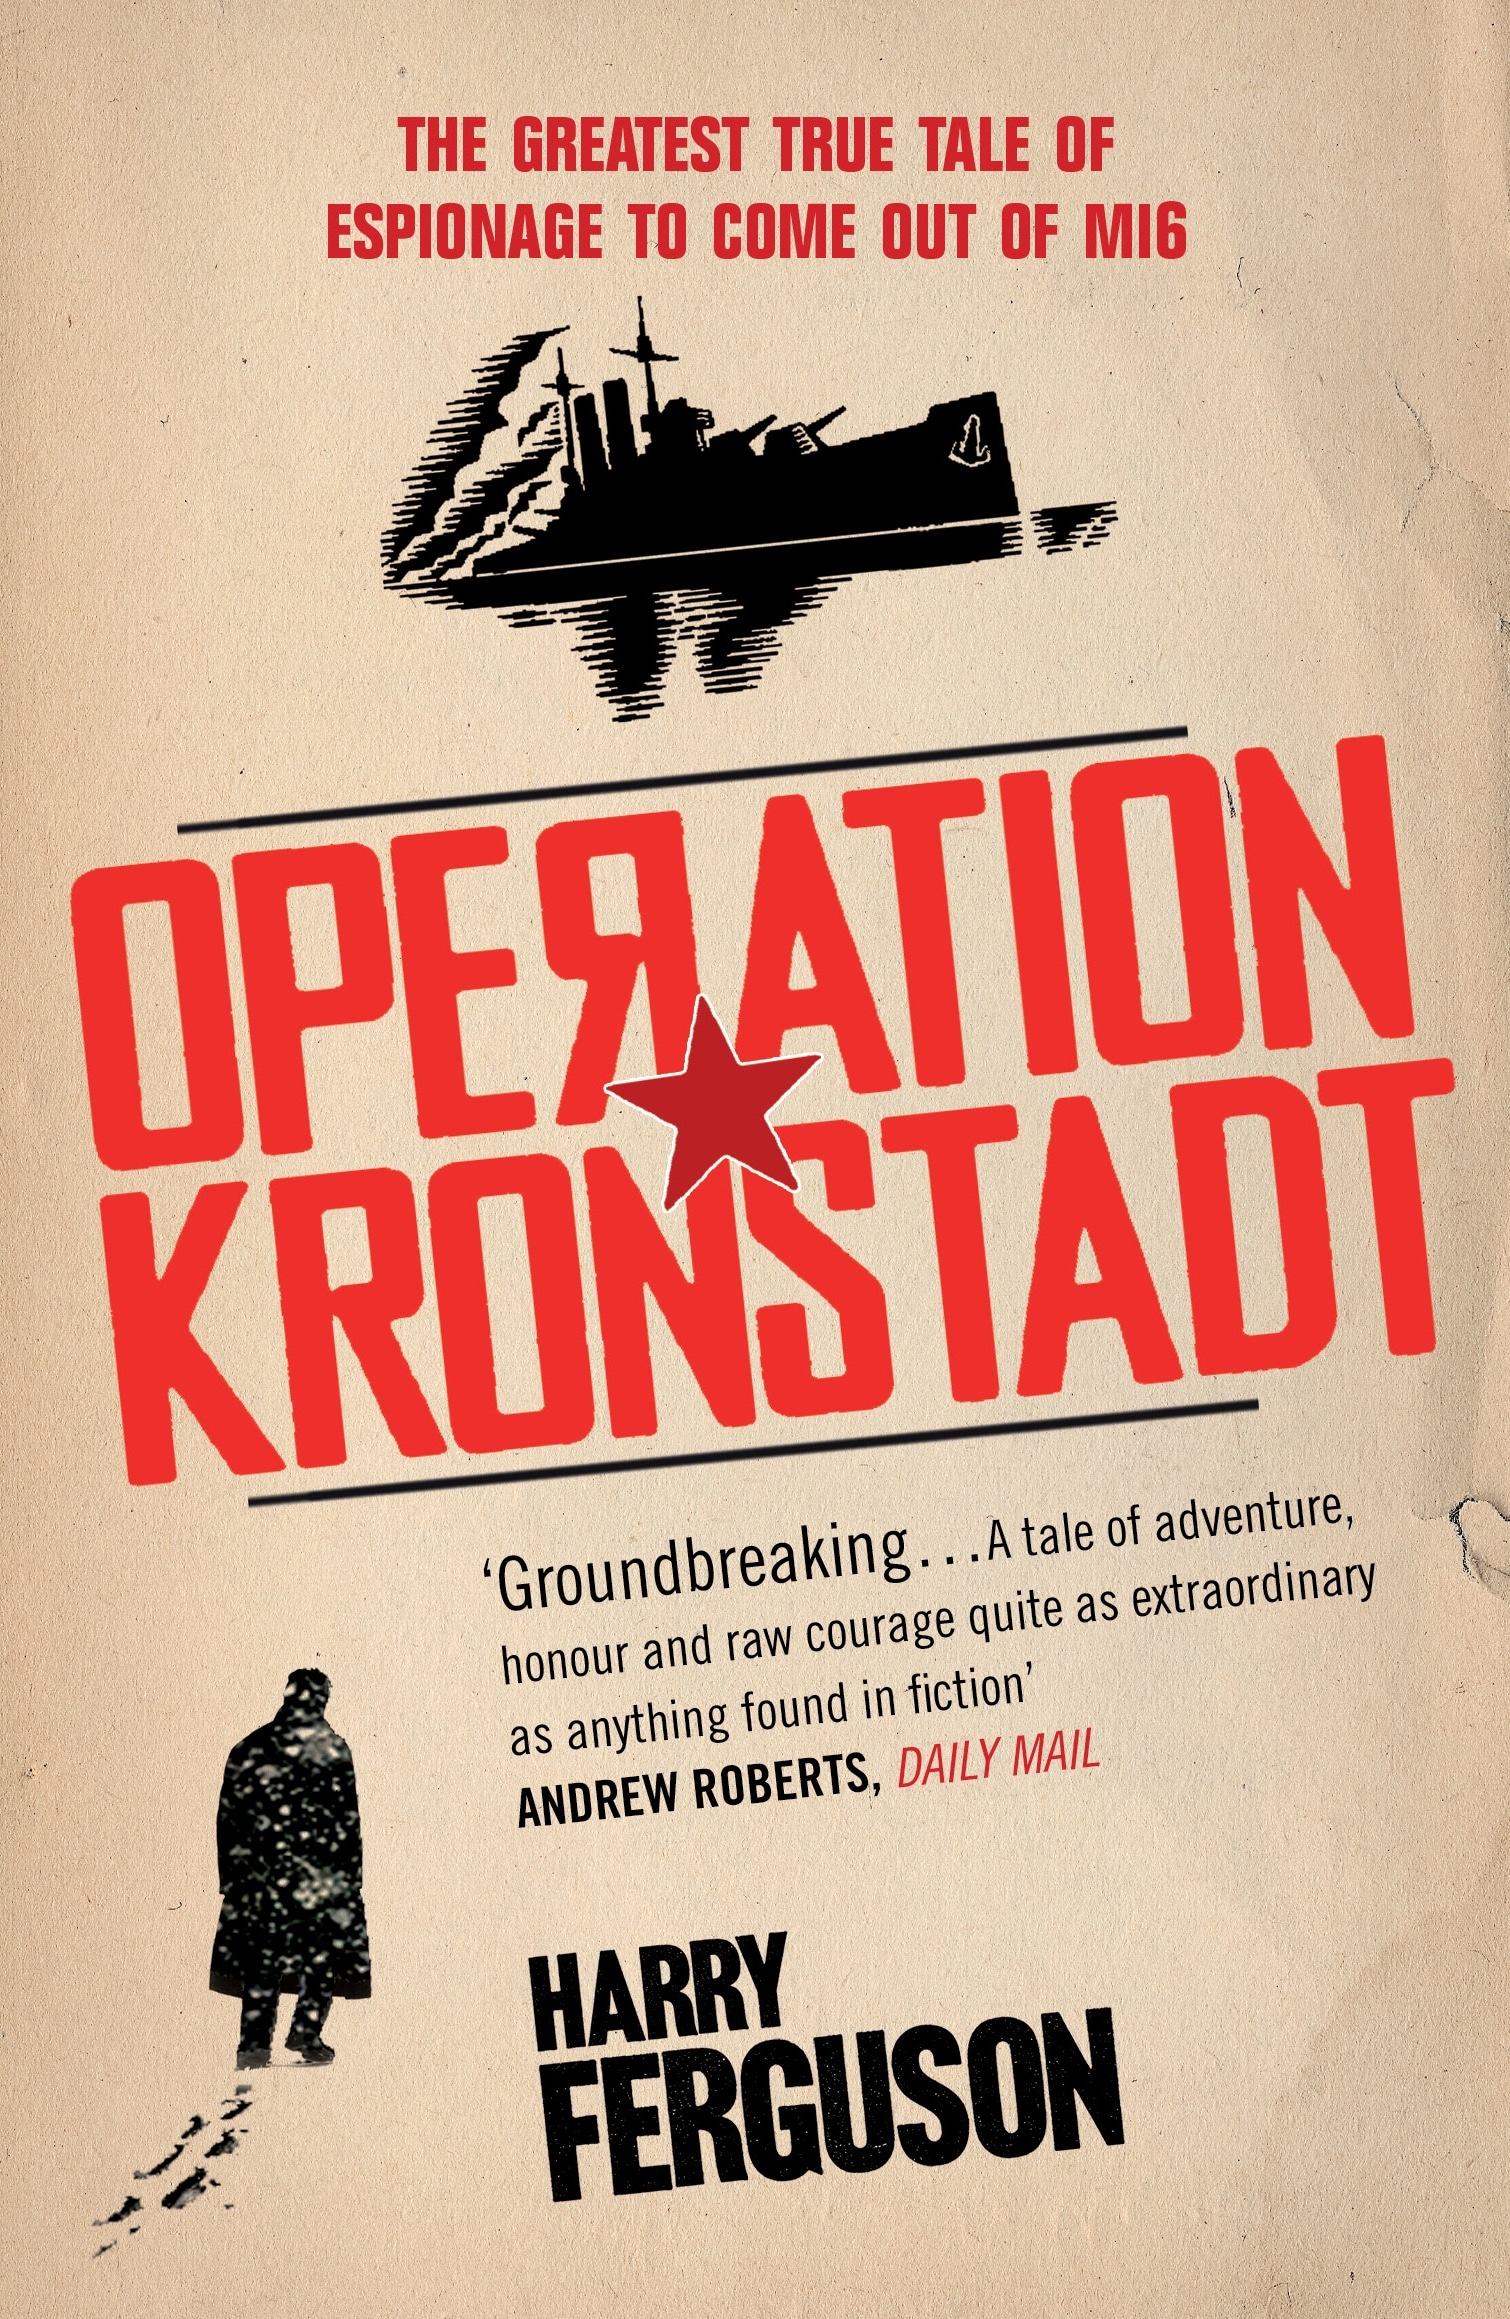 Book “Operation Kronstadt” by Harry Ferguson — March 4, 2010